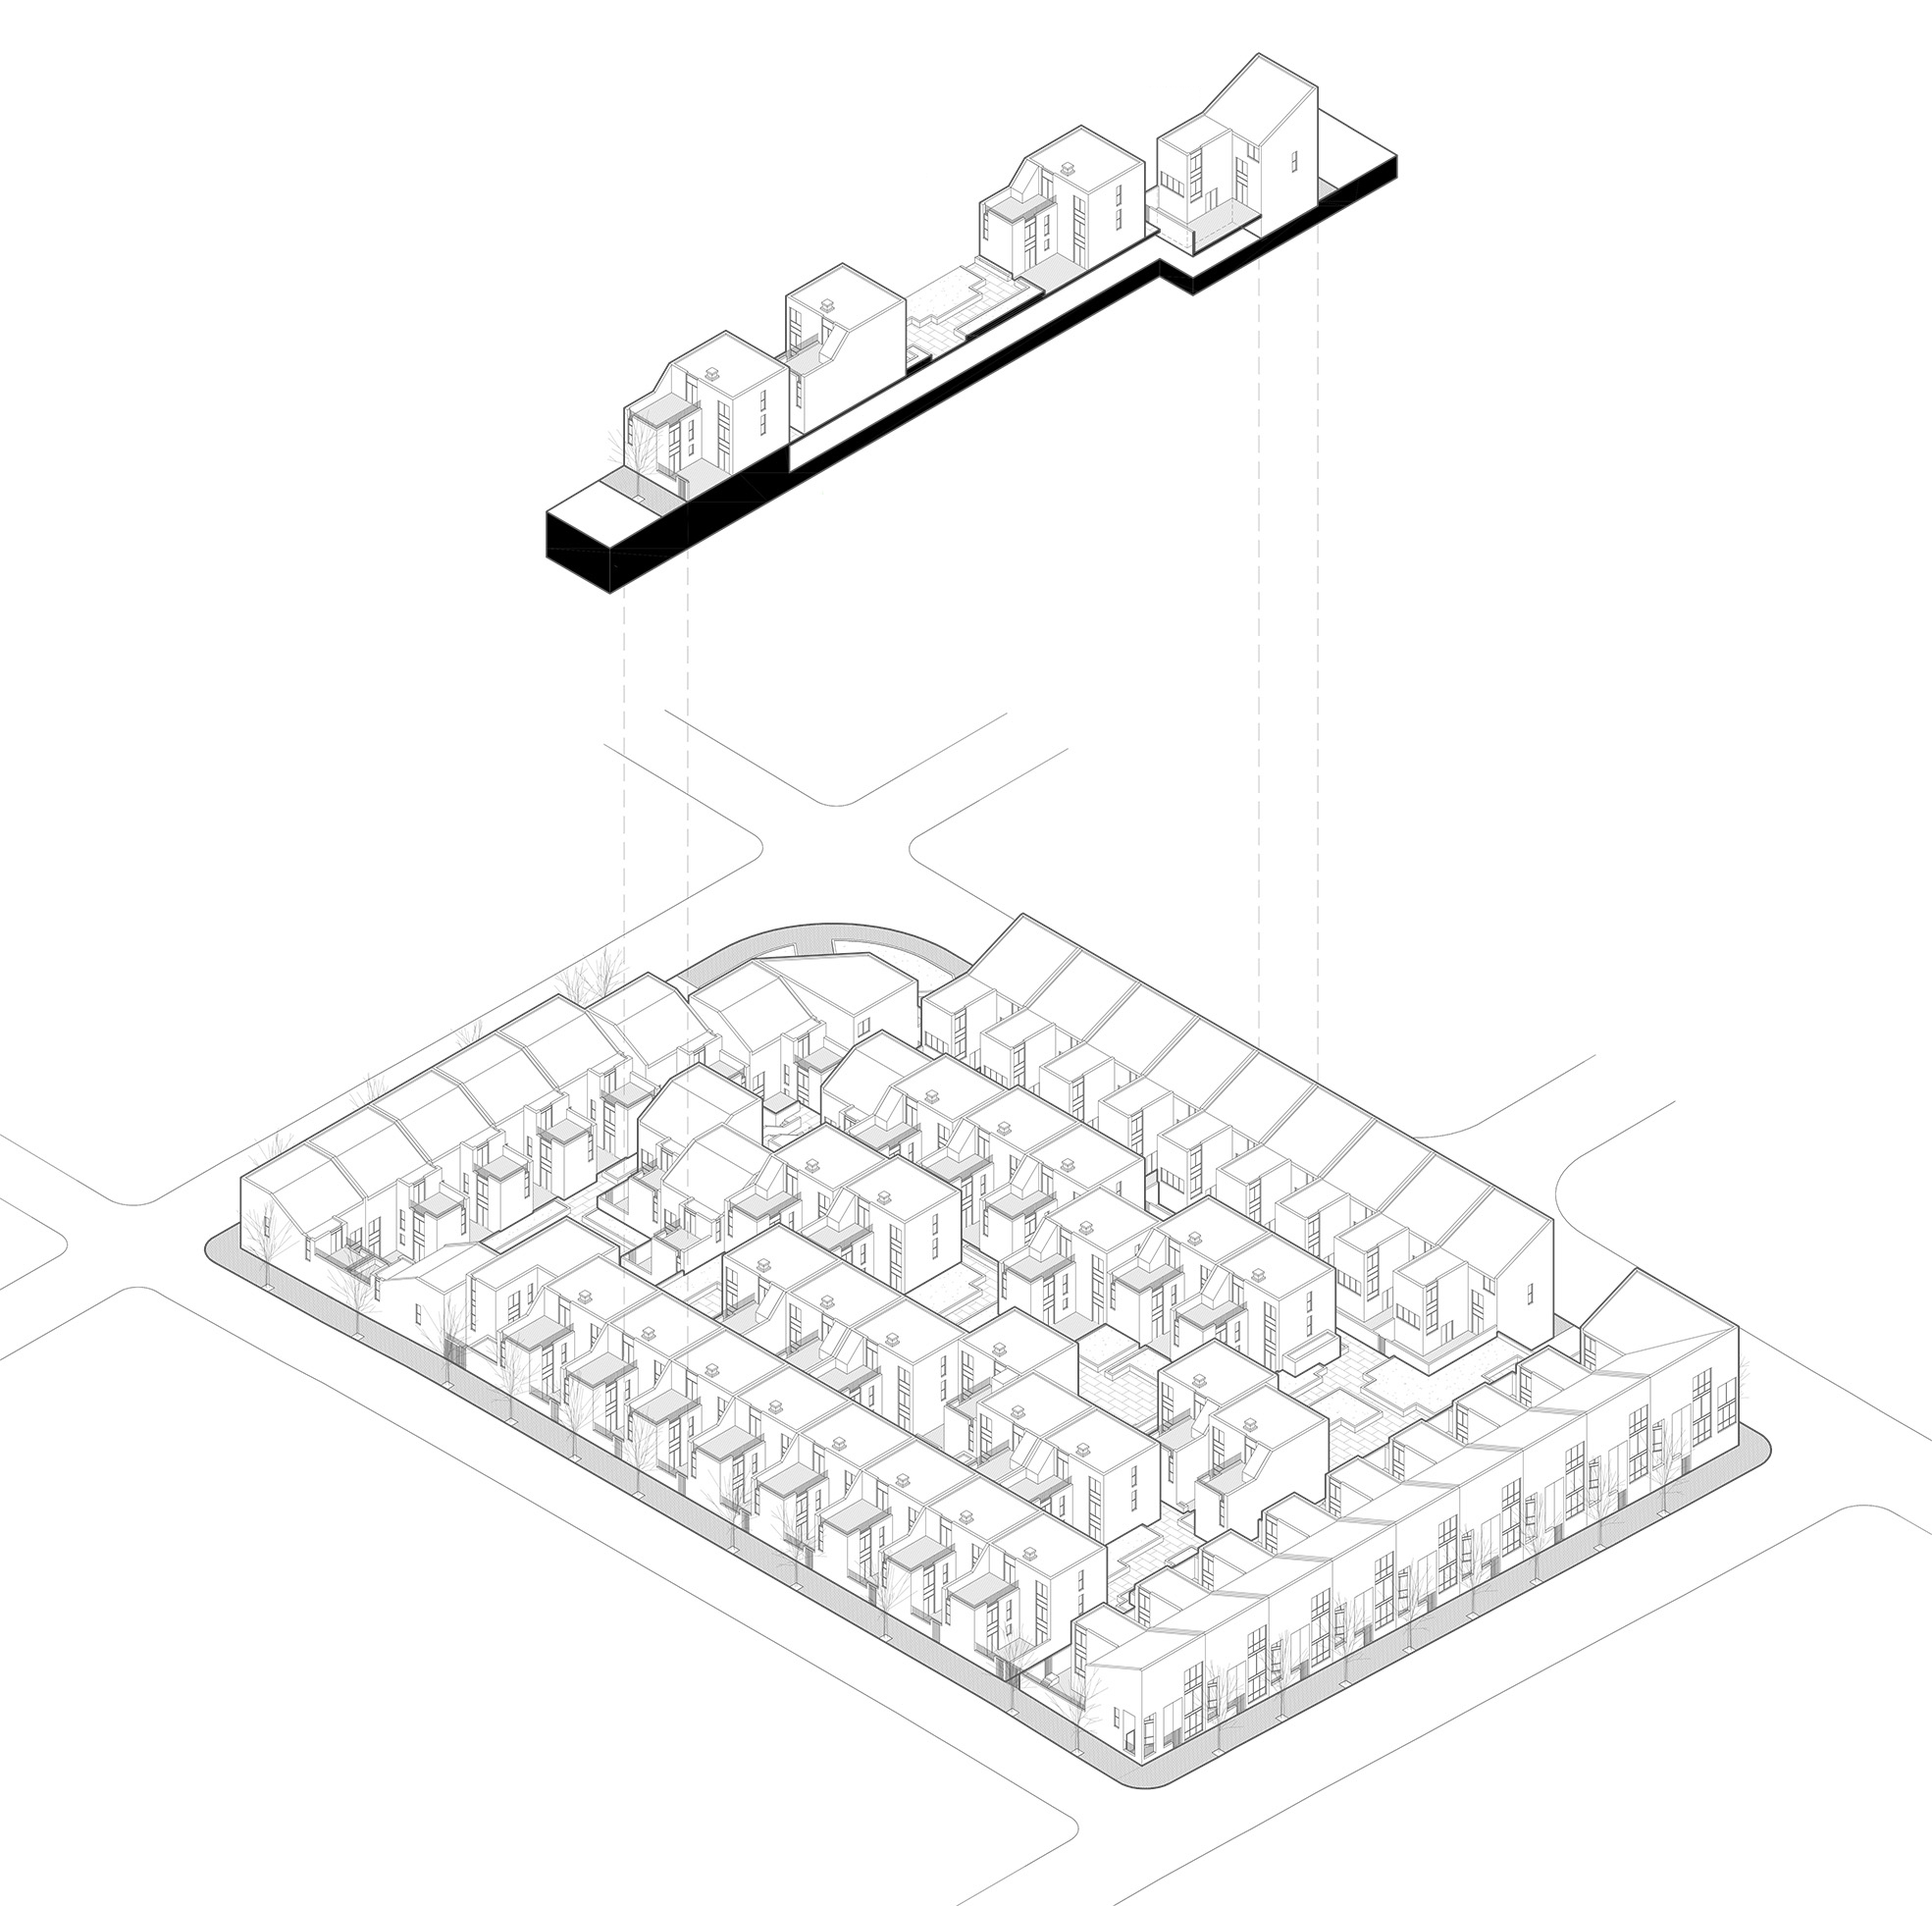 enn’s Landing Square, Philadelphia, 1968. Architect: Louis Sauer. Analysis drawing by Maria Berrios / Andres Mendoza / Mila Santana for “Urban Housing – Typology and Invention” seminar